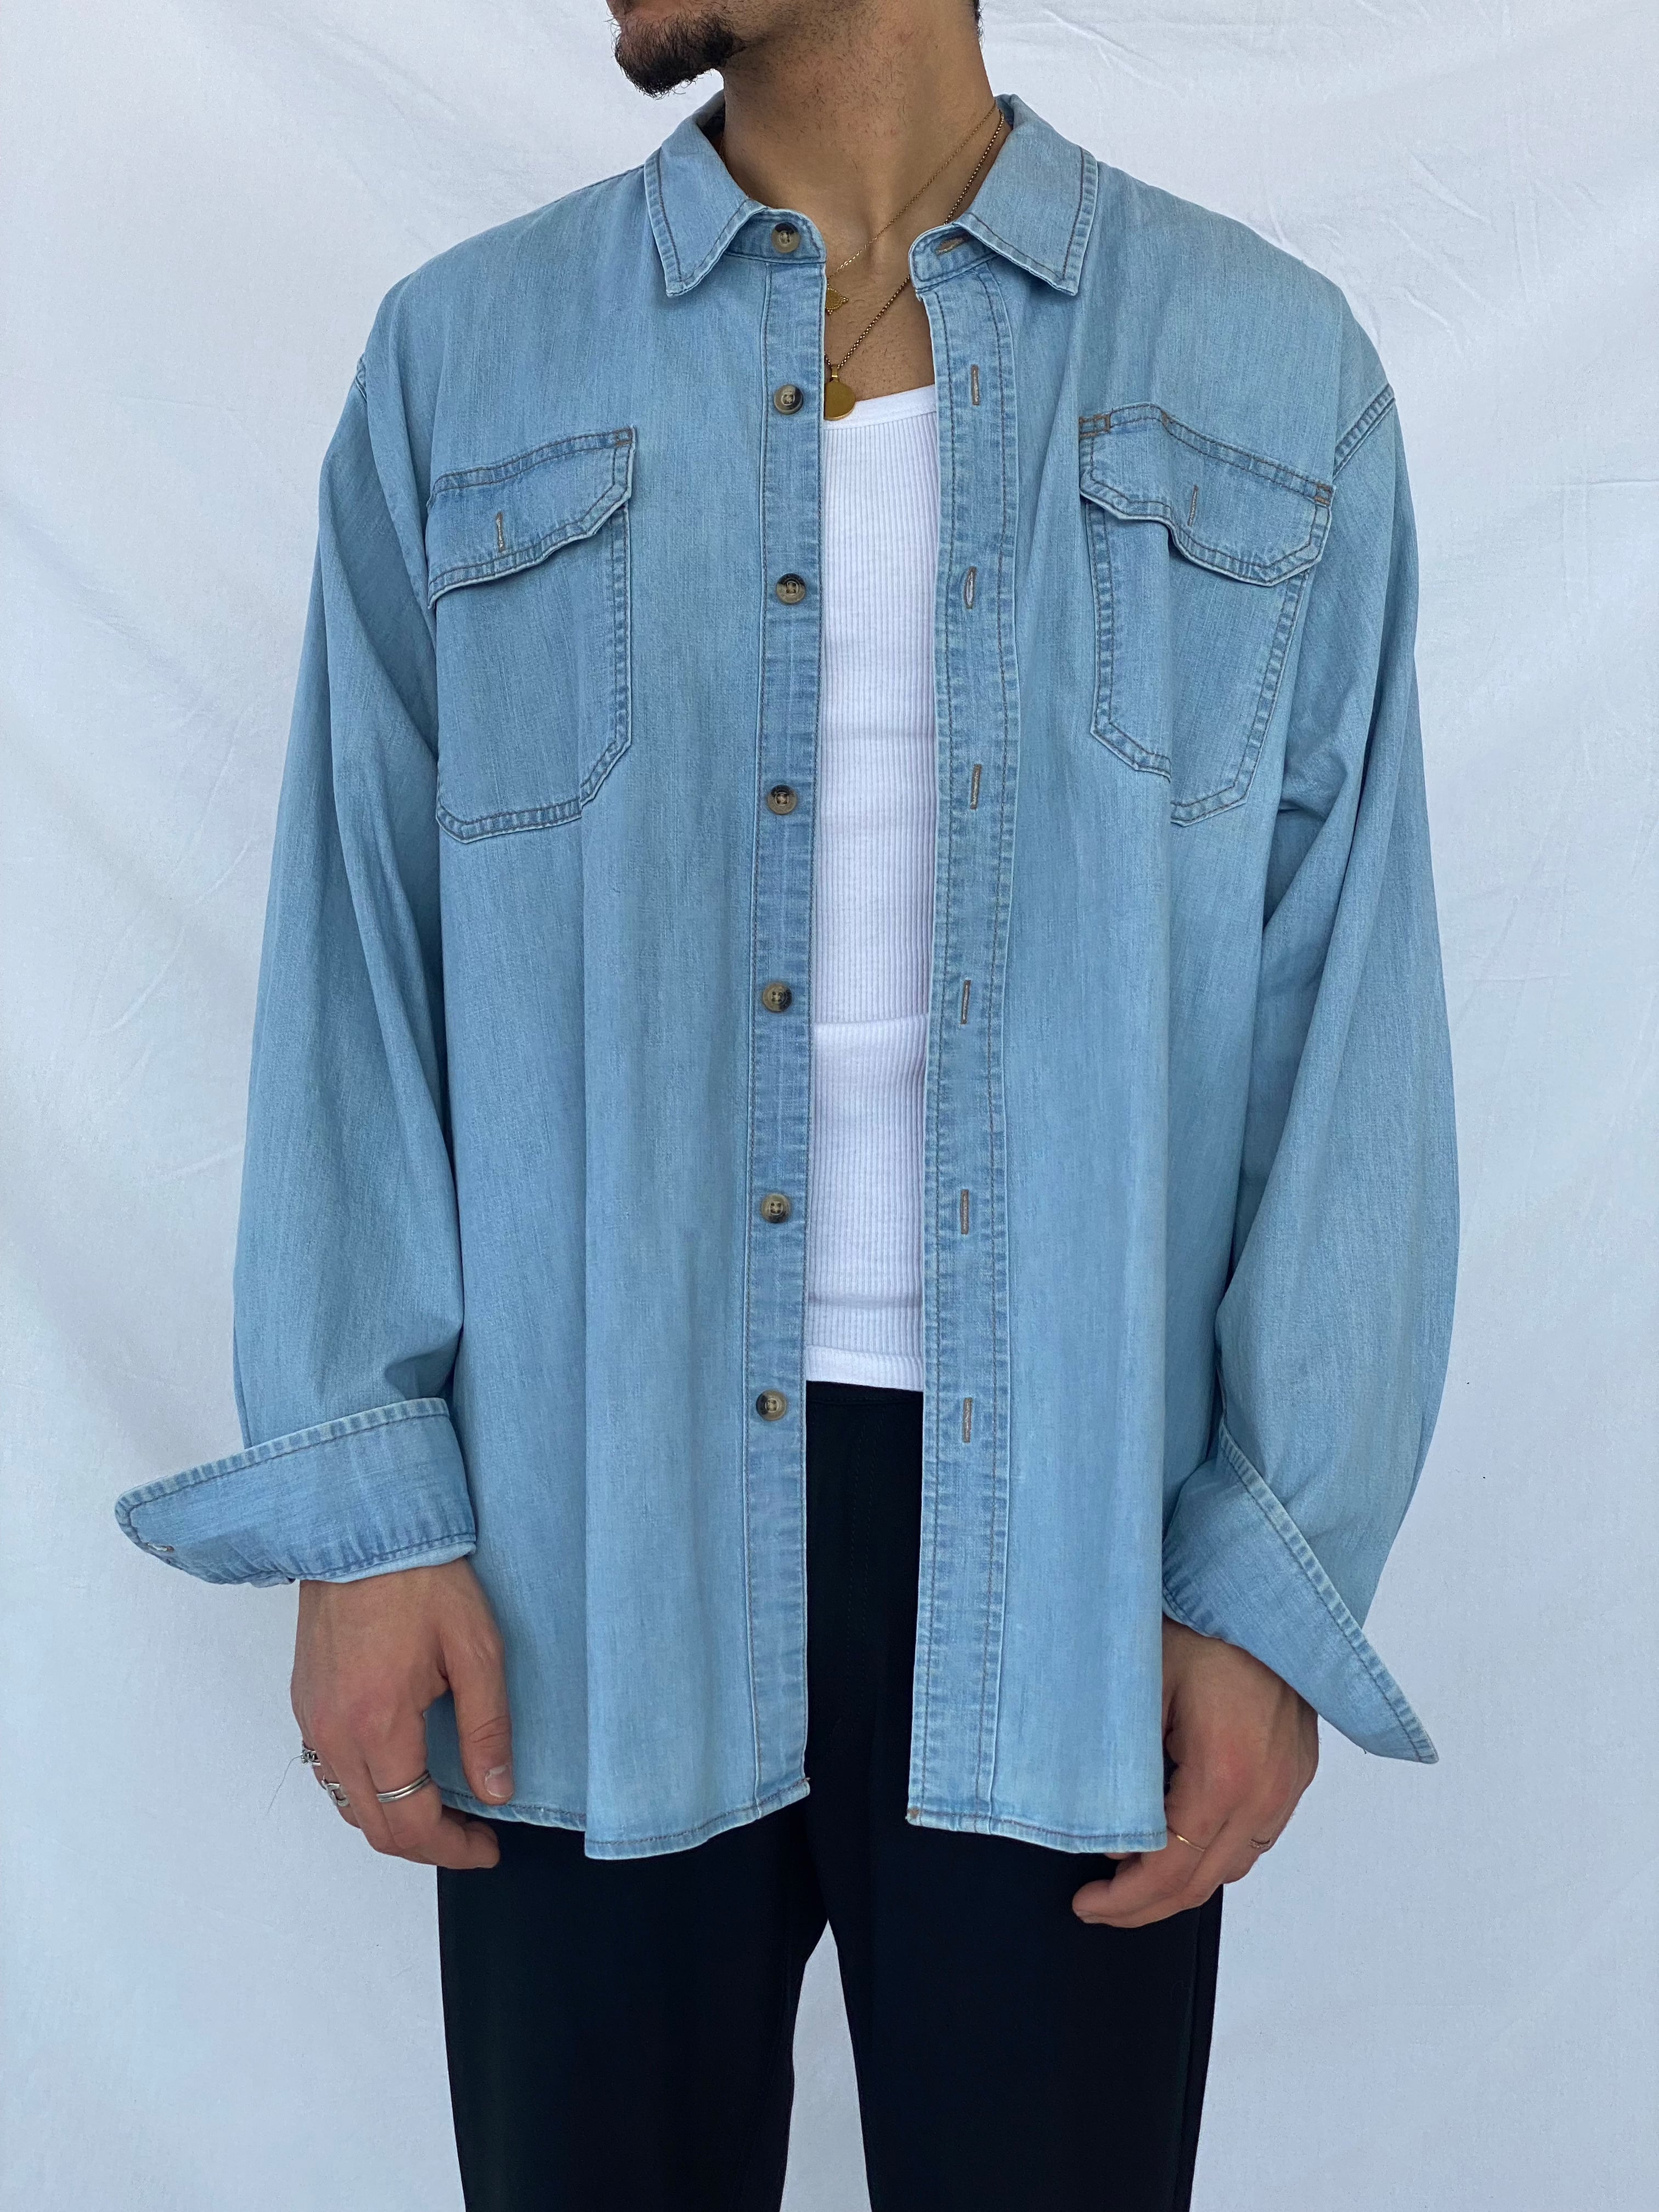 Wrangler Denim Shirt - Balagan Vintage Full Sleeve Shirt 90s, outerwear, shirt, vintage, wrangler